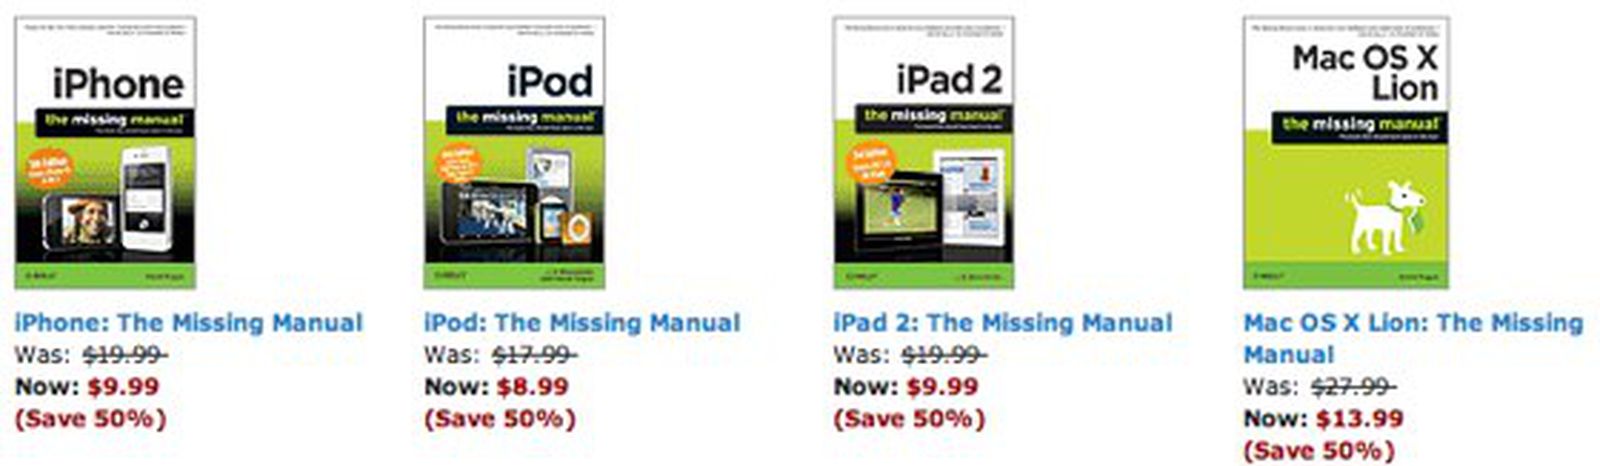 intuit quicken essentials for mac 2011